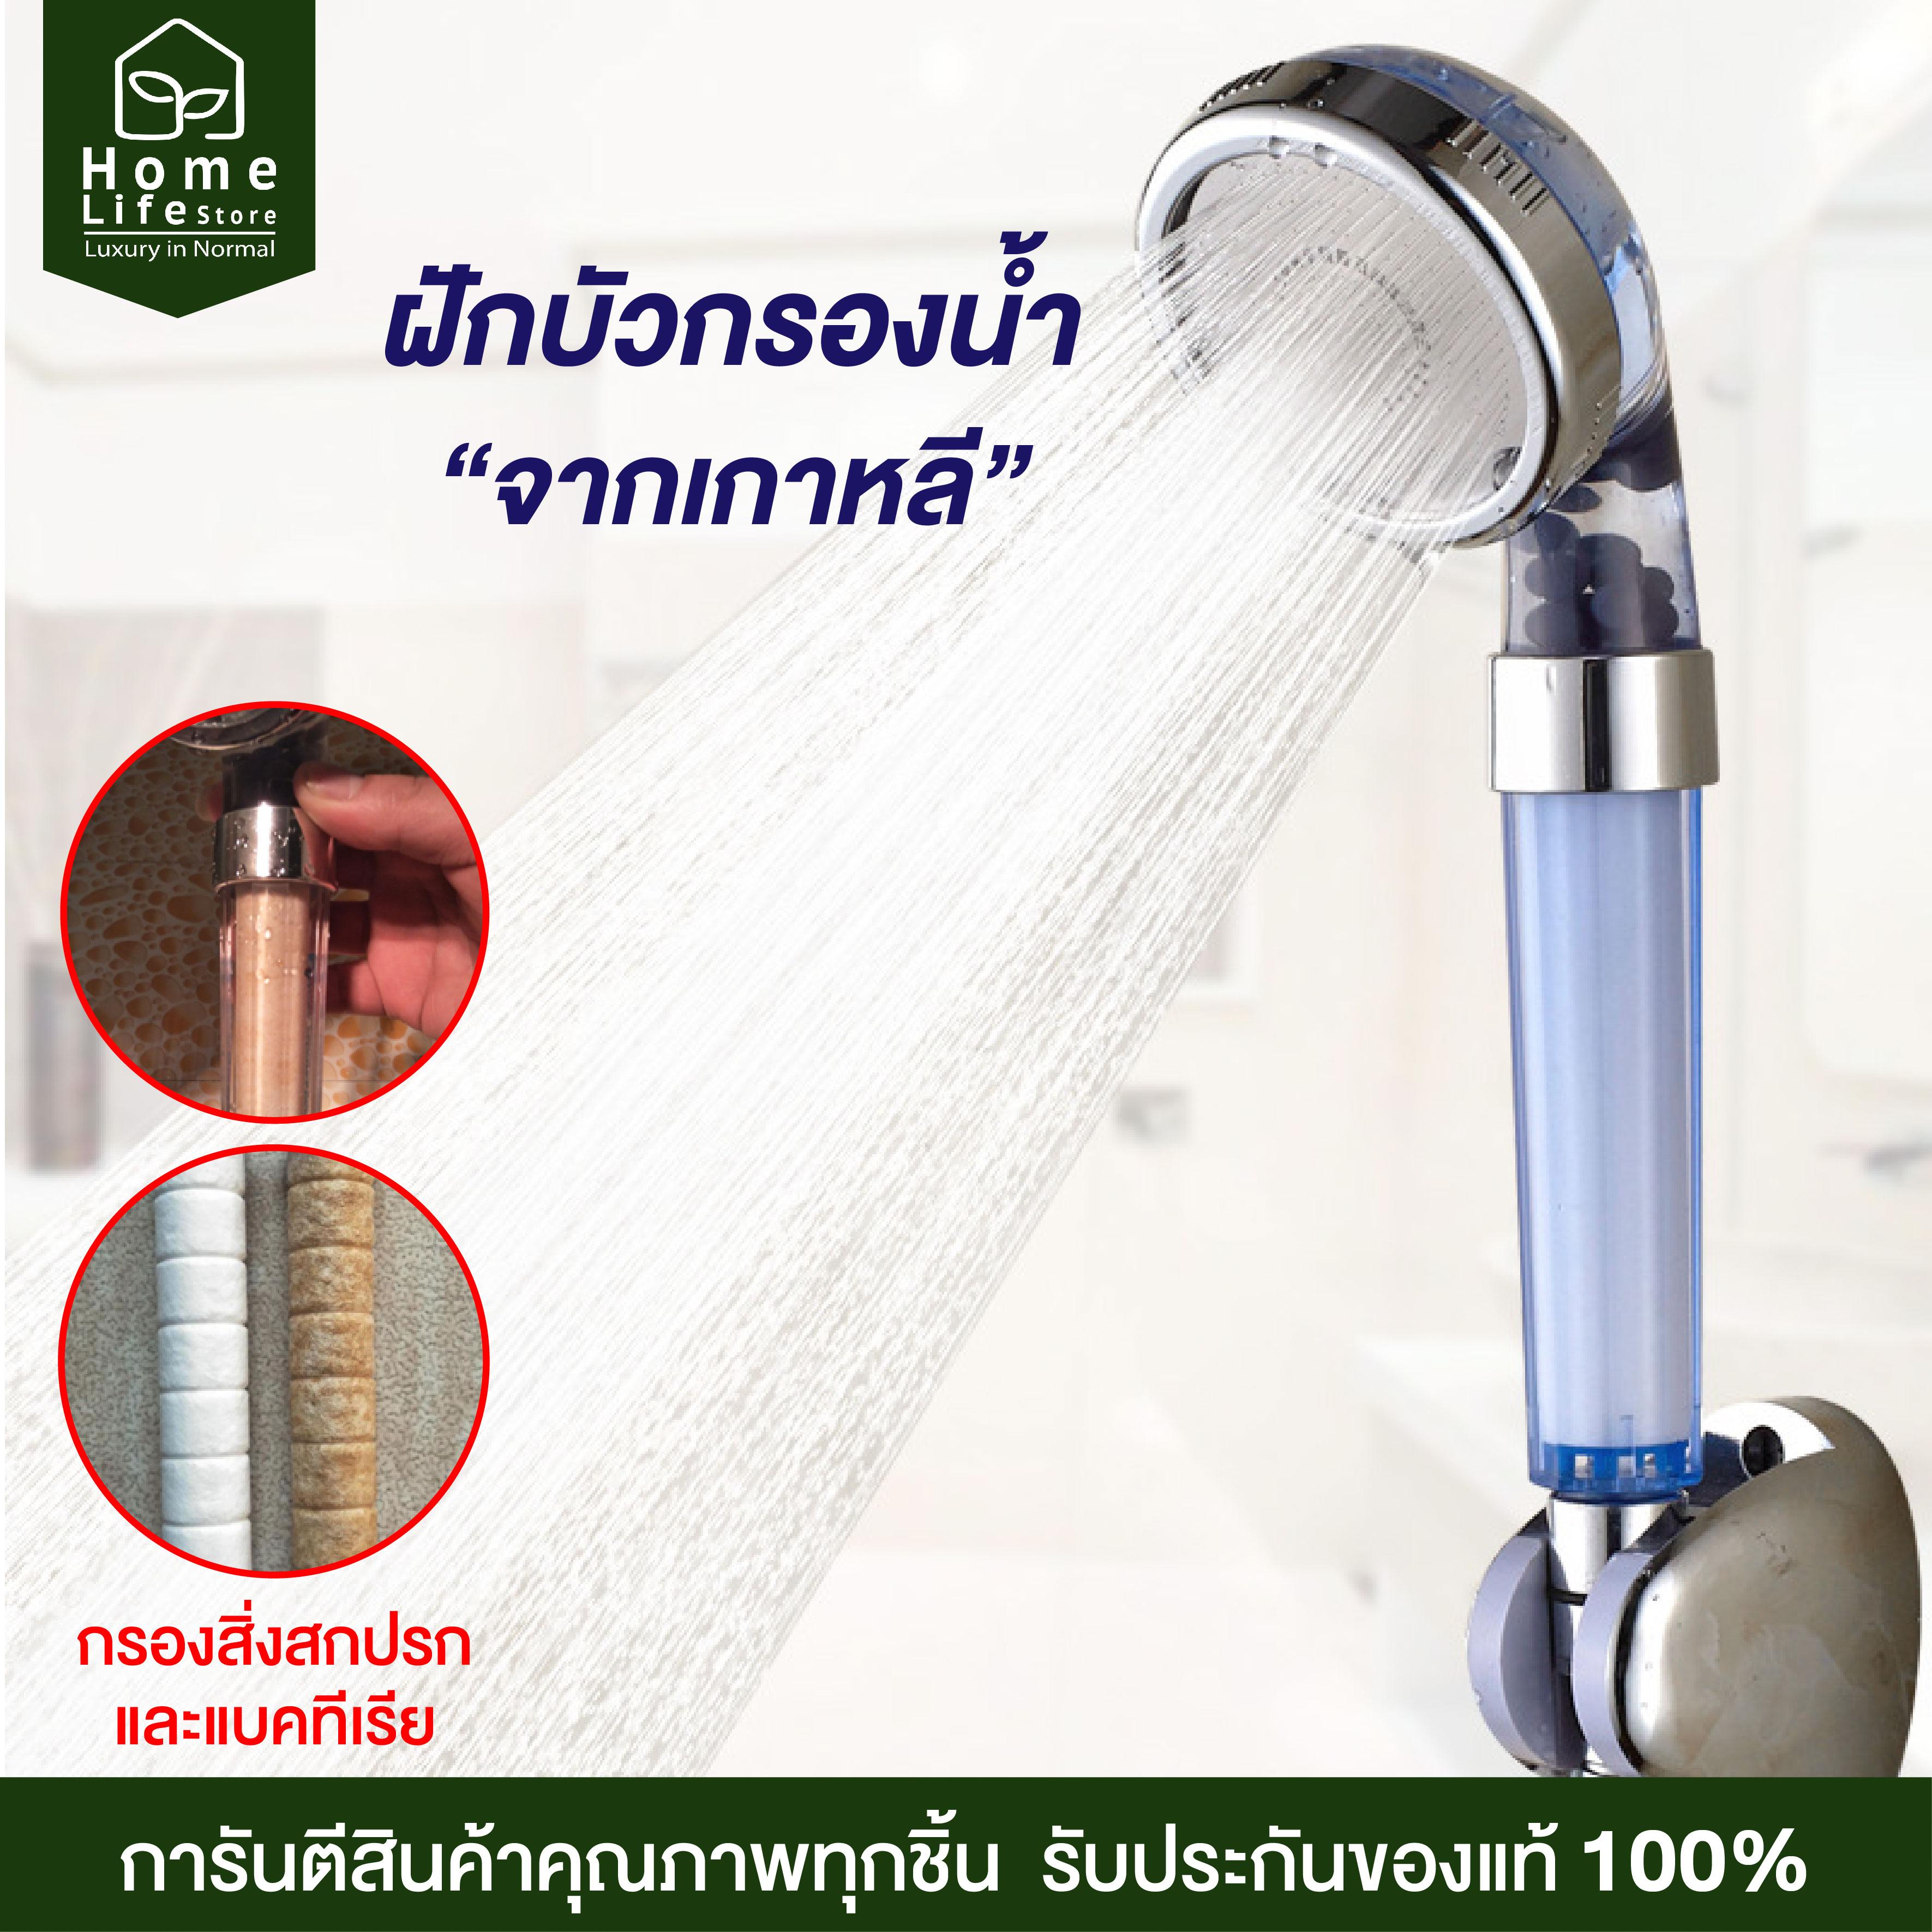 Homelife Store ฝักบัวอาบน้ำ ฝักบัวกรองน้ำ ฝักบัวเกาหลี ฝักบัว สะอาดทุกหยดสดชื่นกว่าเดิม หมดปัญหาน้ำมีกลิ่น หรือปนเปื้อนสารตกค้าง (Shower Water Filter Nozzle Head Sprinklerp SPA PP cotton Shower Supercharged Handheld Water-saving Bath Shower Nozzle)